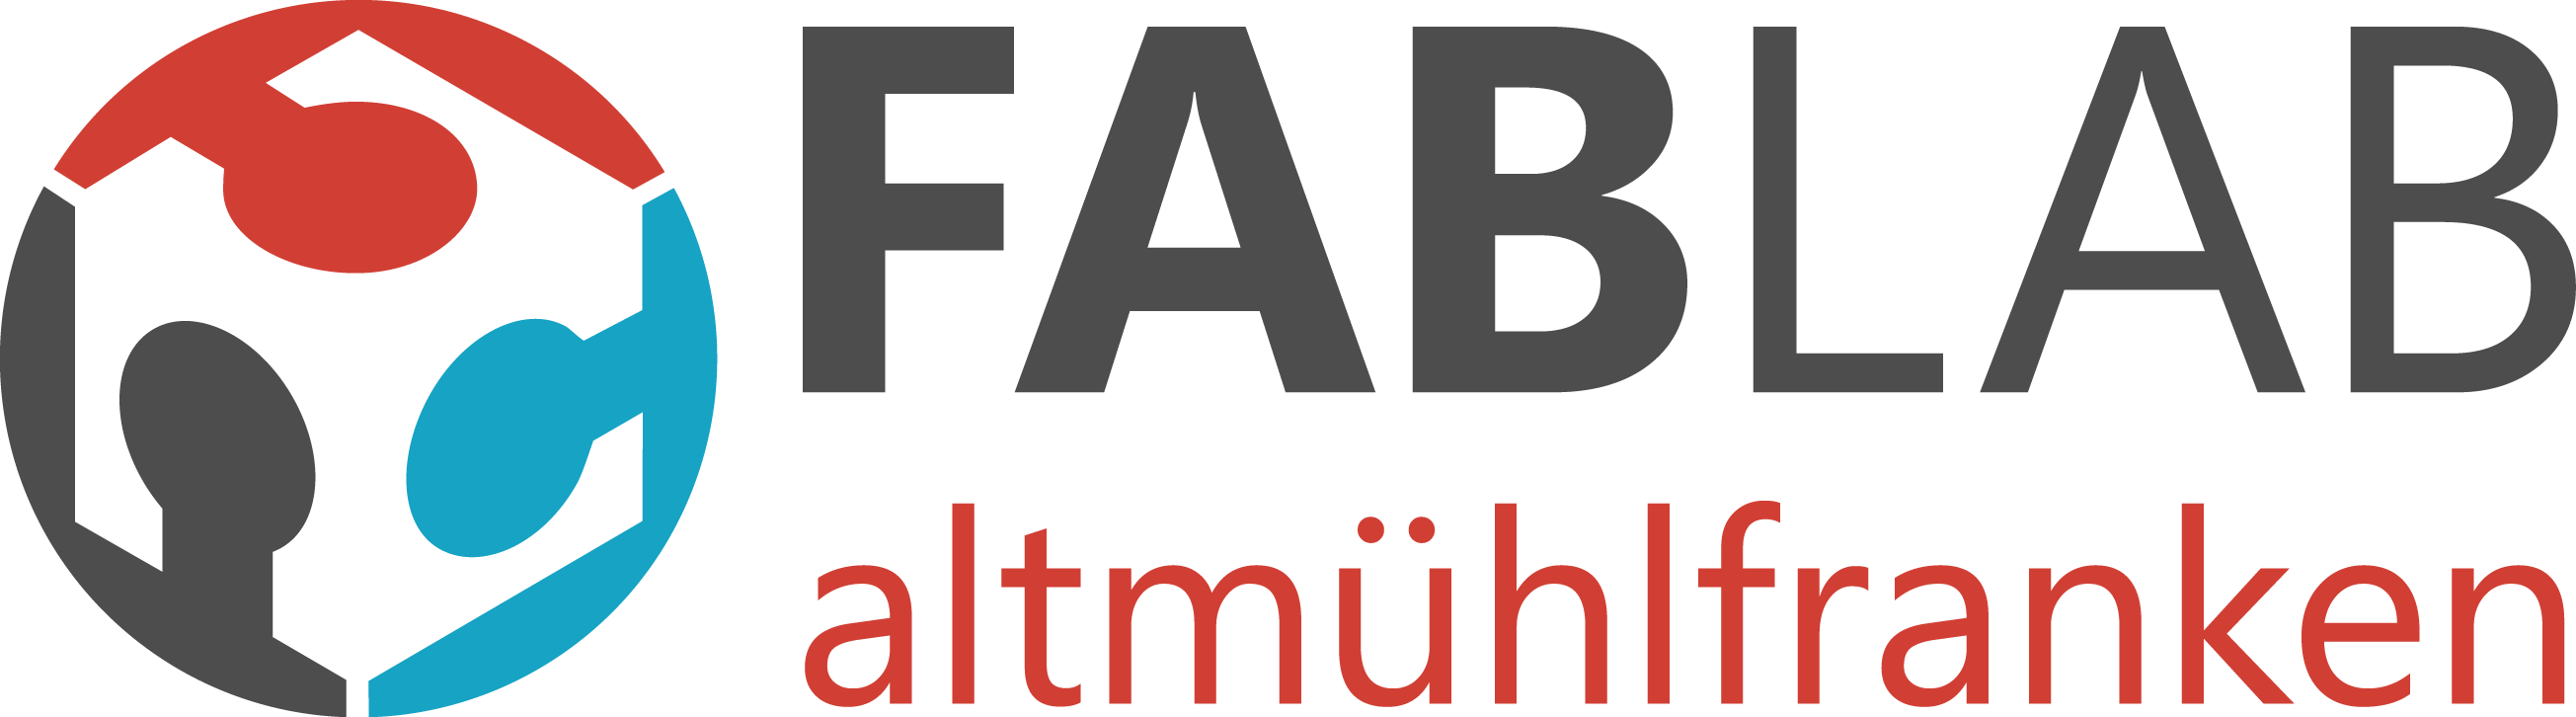 FabLab Altmühlfranken e. V.